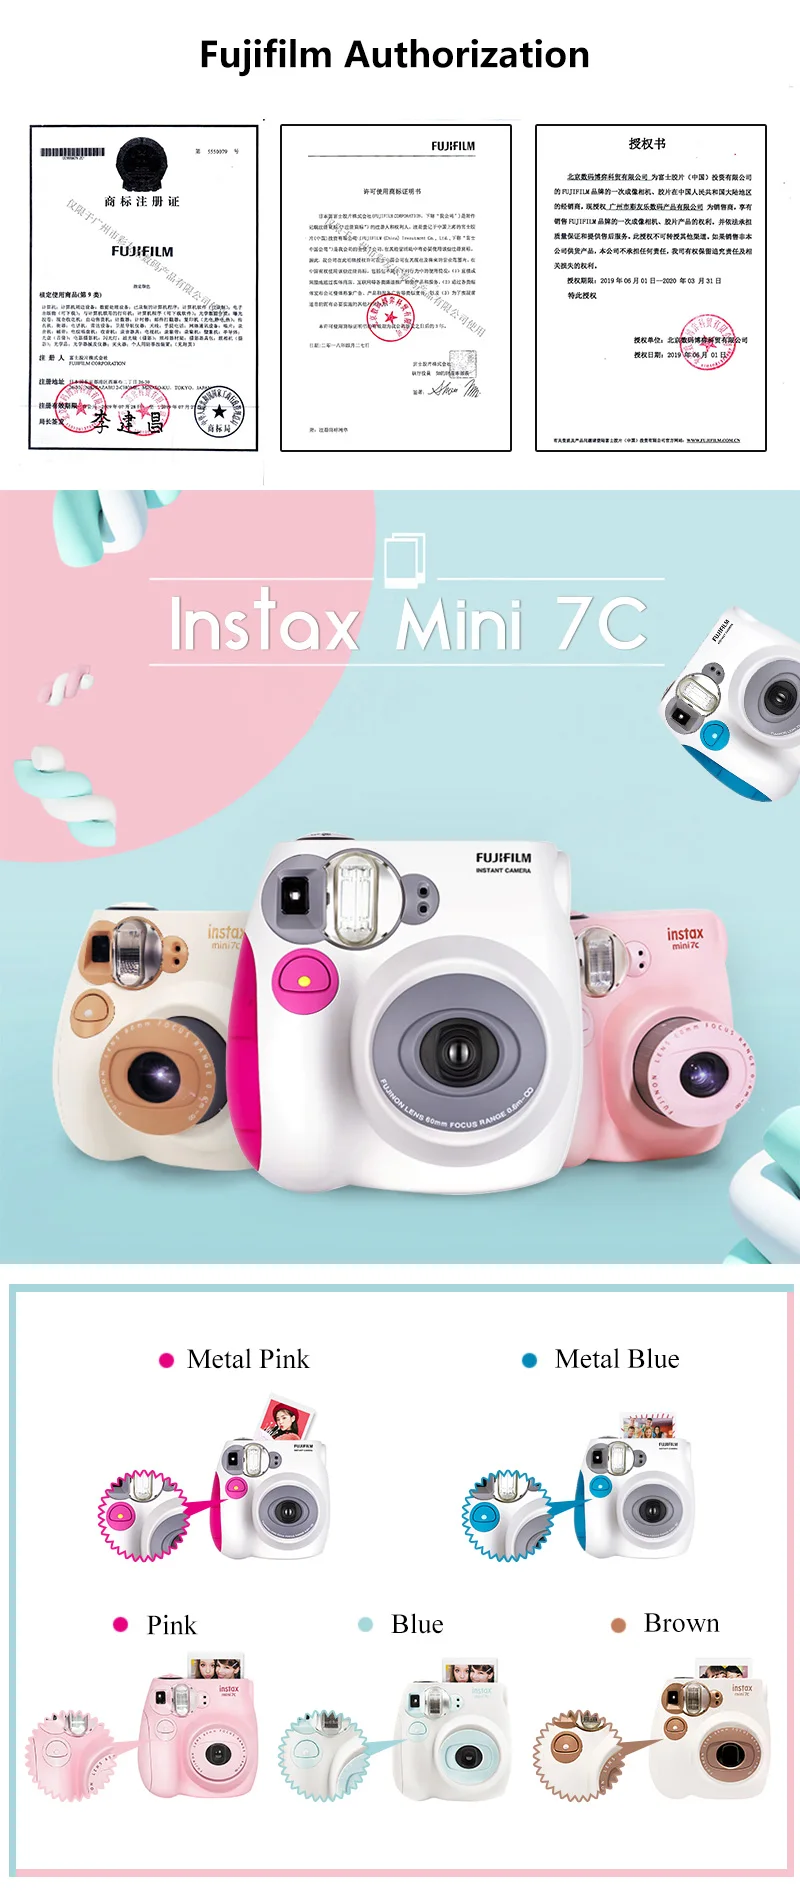 Durable Cute Design Fujifilm Mini 7s / 7c Instant Camera - Buy Instax Mini Instax Mini 7s Instant Camera,Instant Camera on Alibaba.com